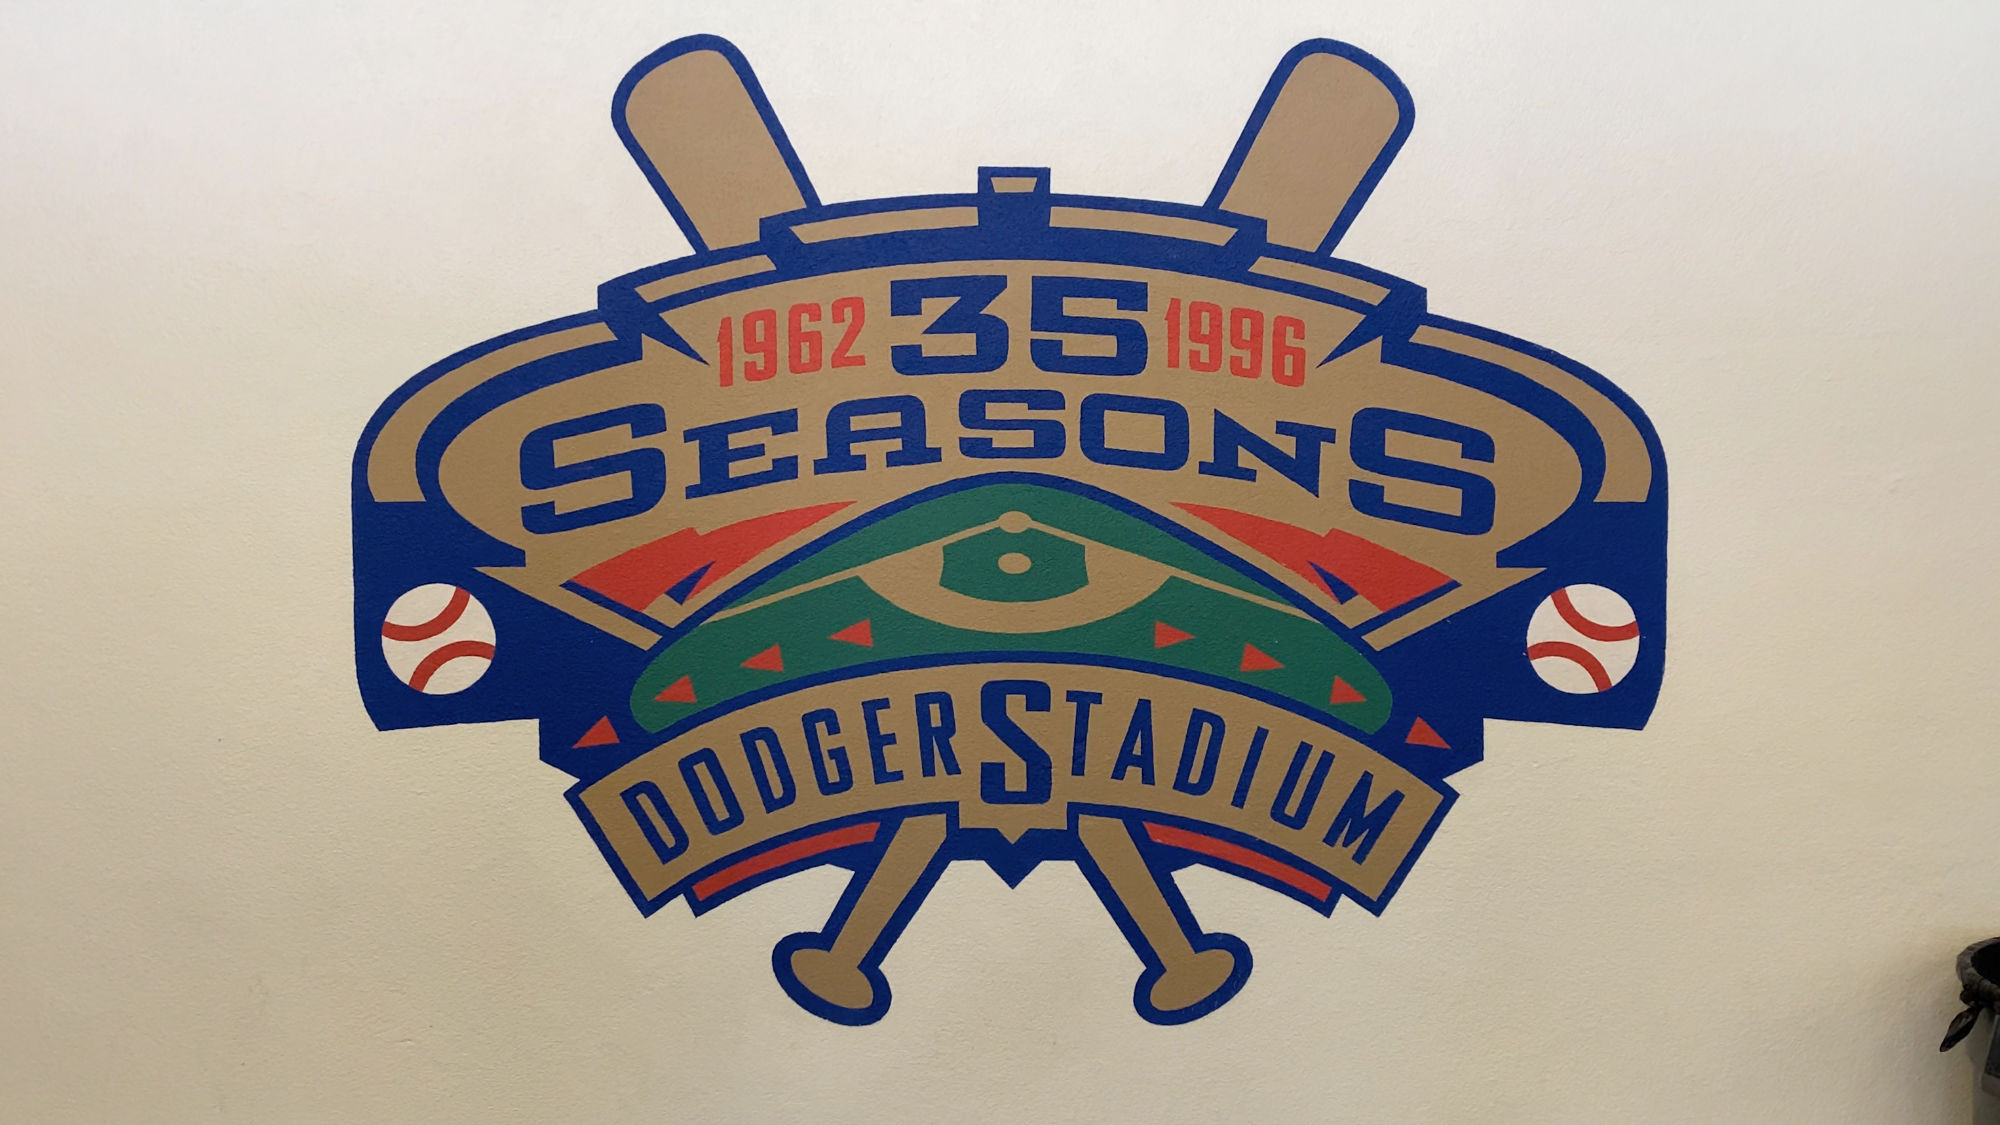 Dodger Stadium 35 Seasons 1962-1996